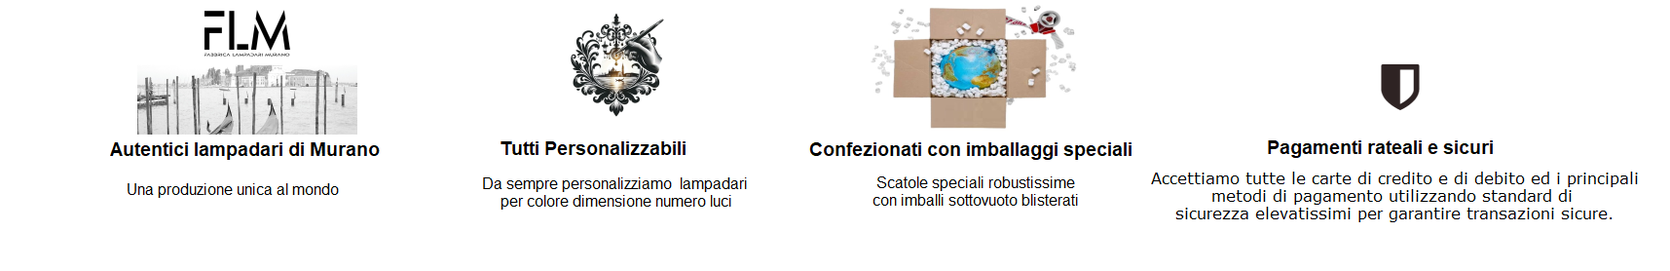 Vendita-Lampadari-vetro-Murano-Online-prezzi-Fabbrica